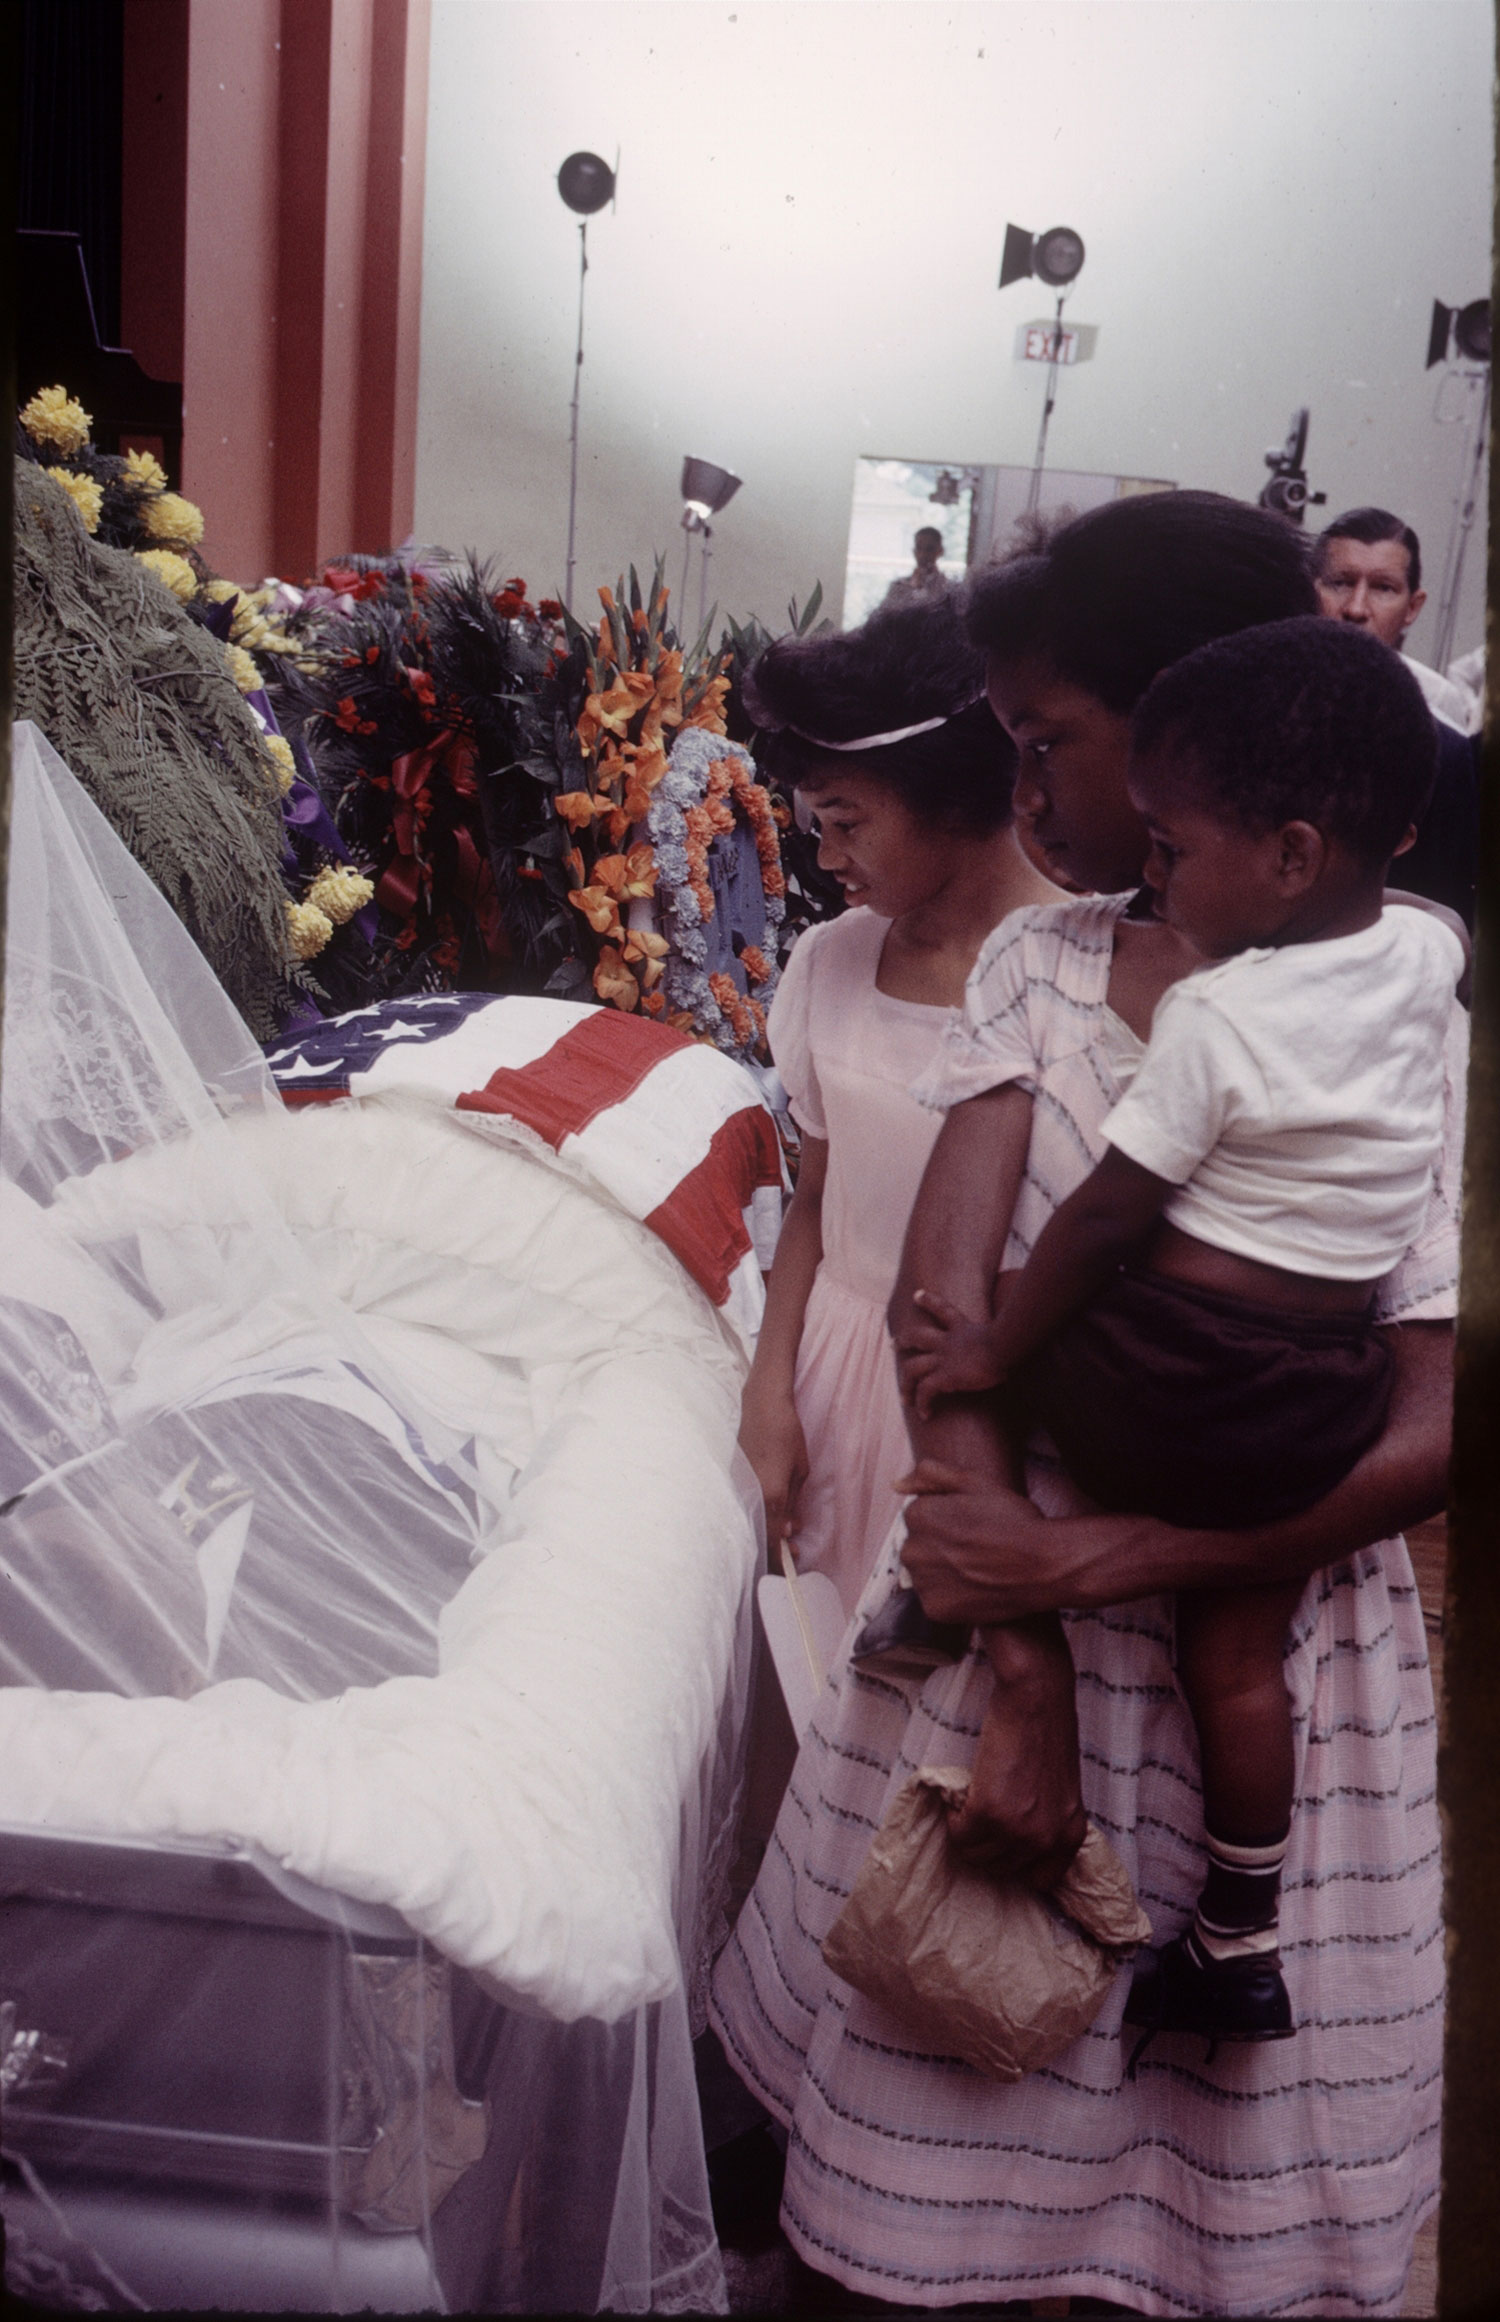 Mourners at Medgar Evers' funeral, Jackson, Miss., June 15, 1963.